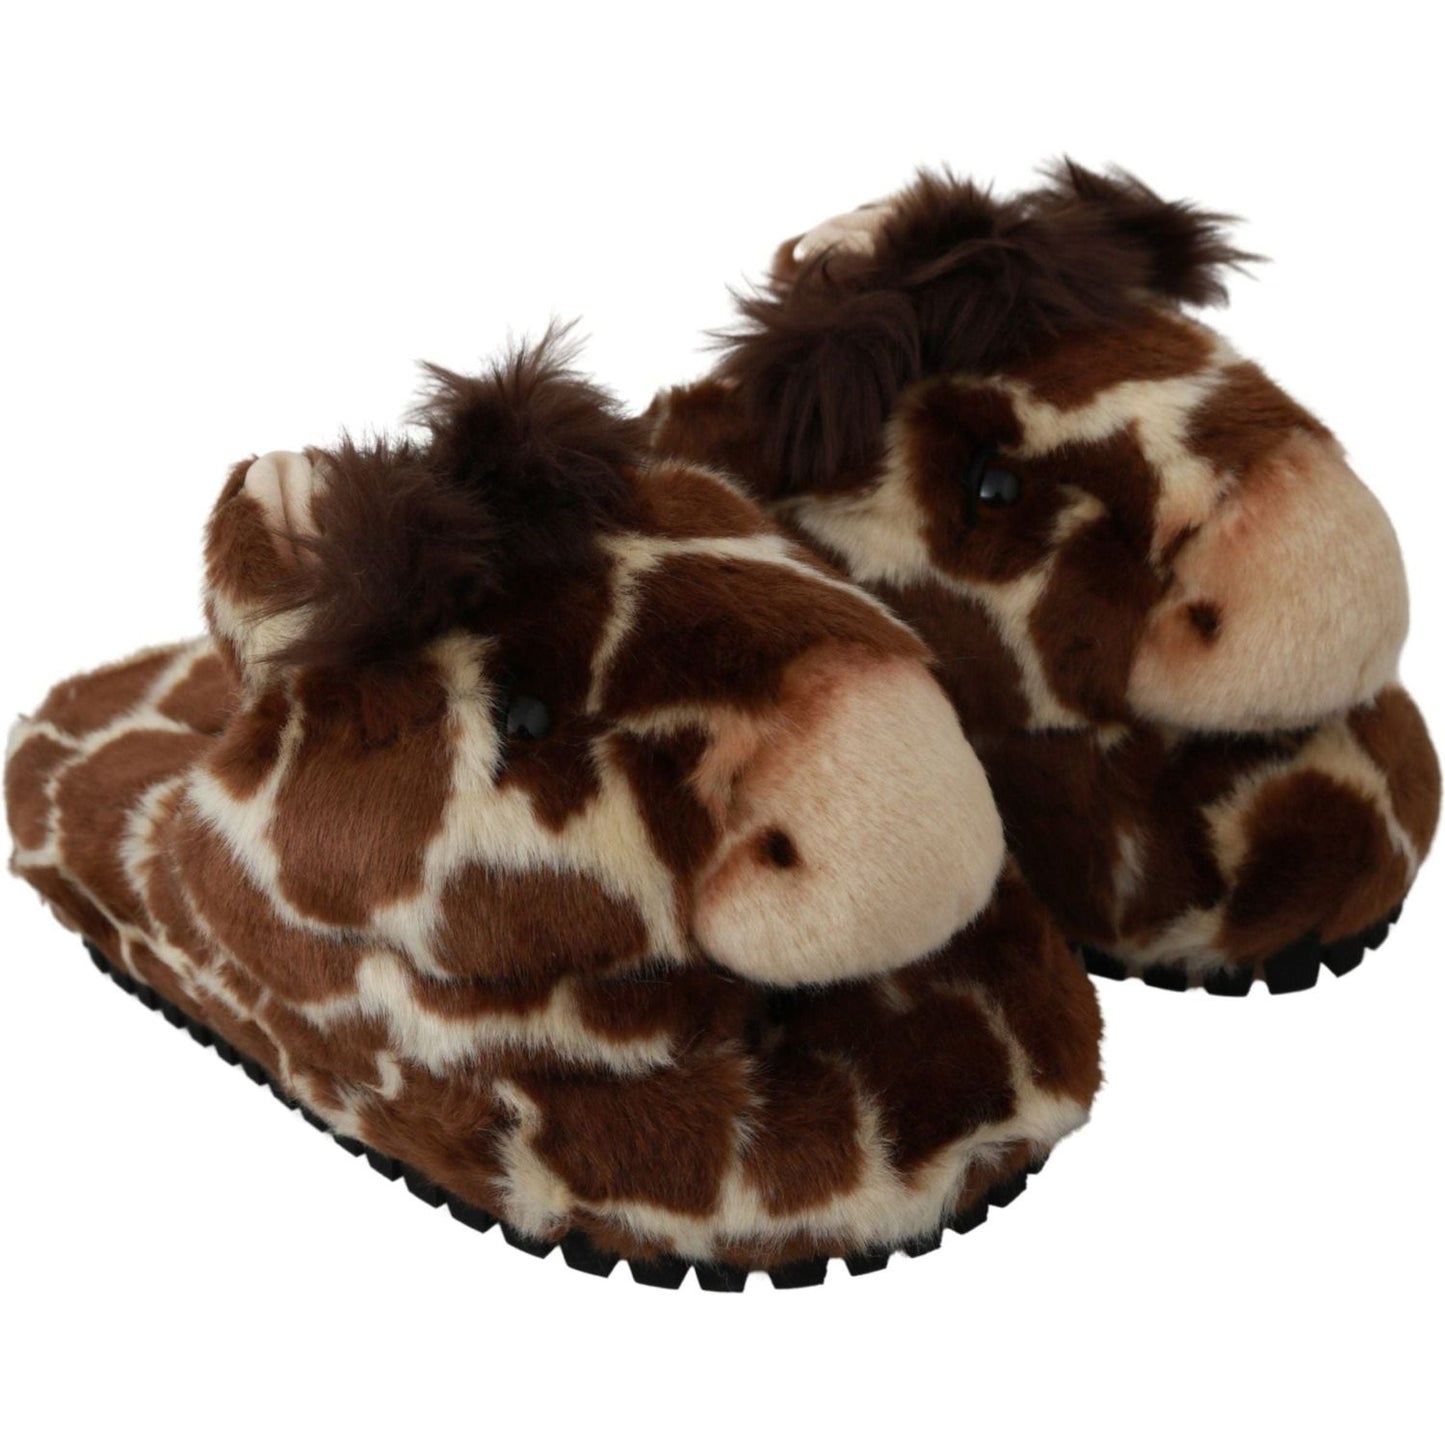 Dolce & Gabbana Elegant Giraffe Pattern Slides for Sophisticated Comfort brown-giraffe-slippers-flats-sandals-shoes